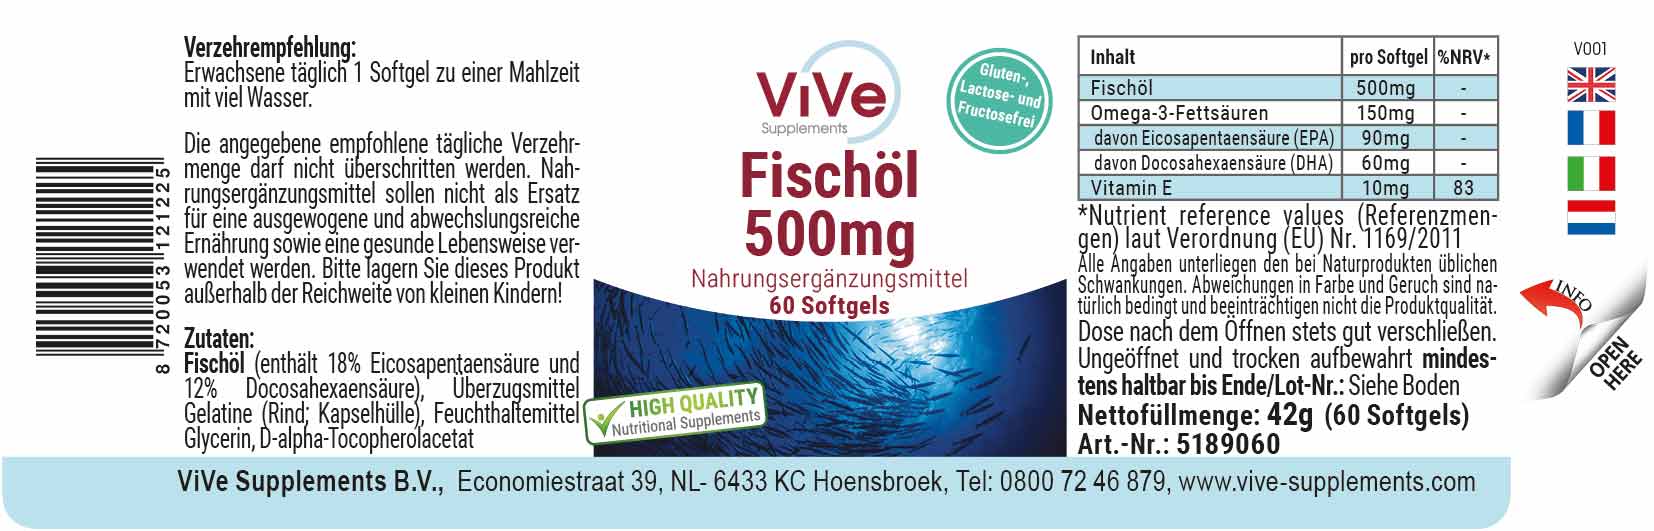 Fish oil 500mg